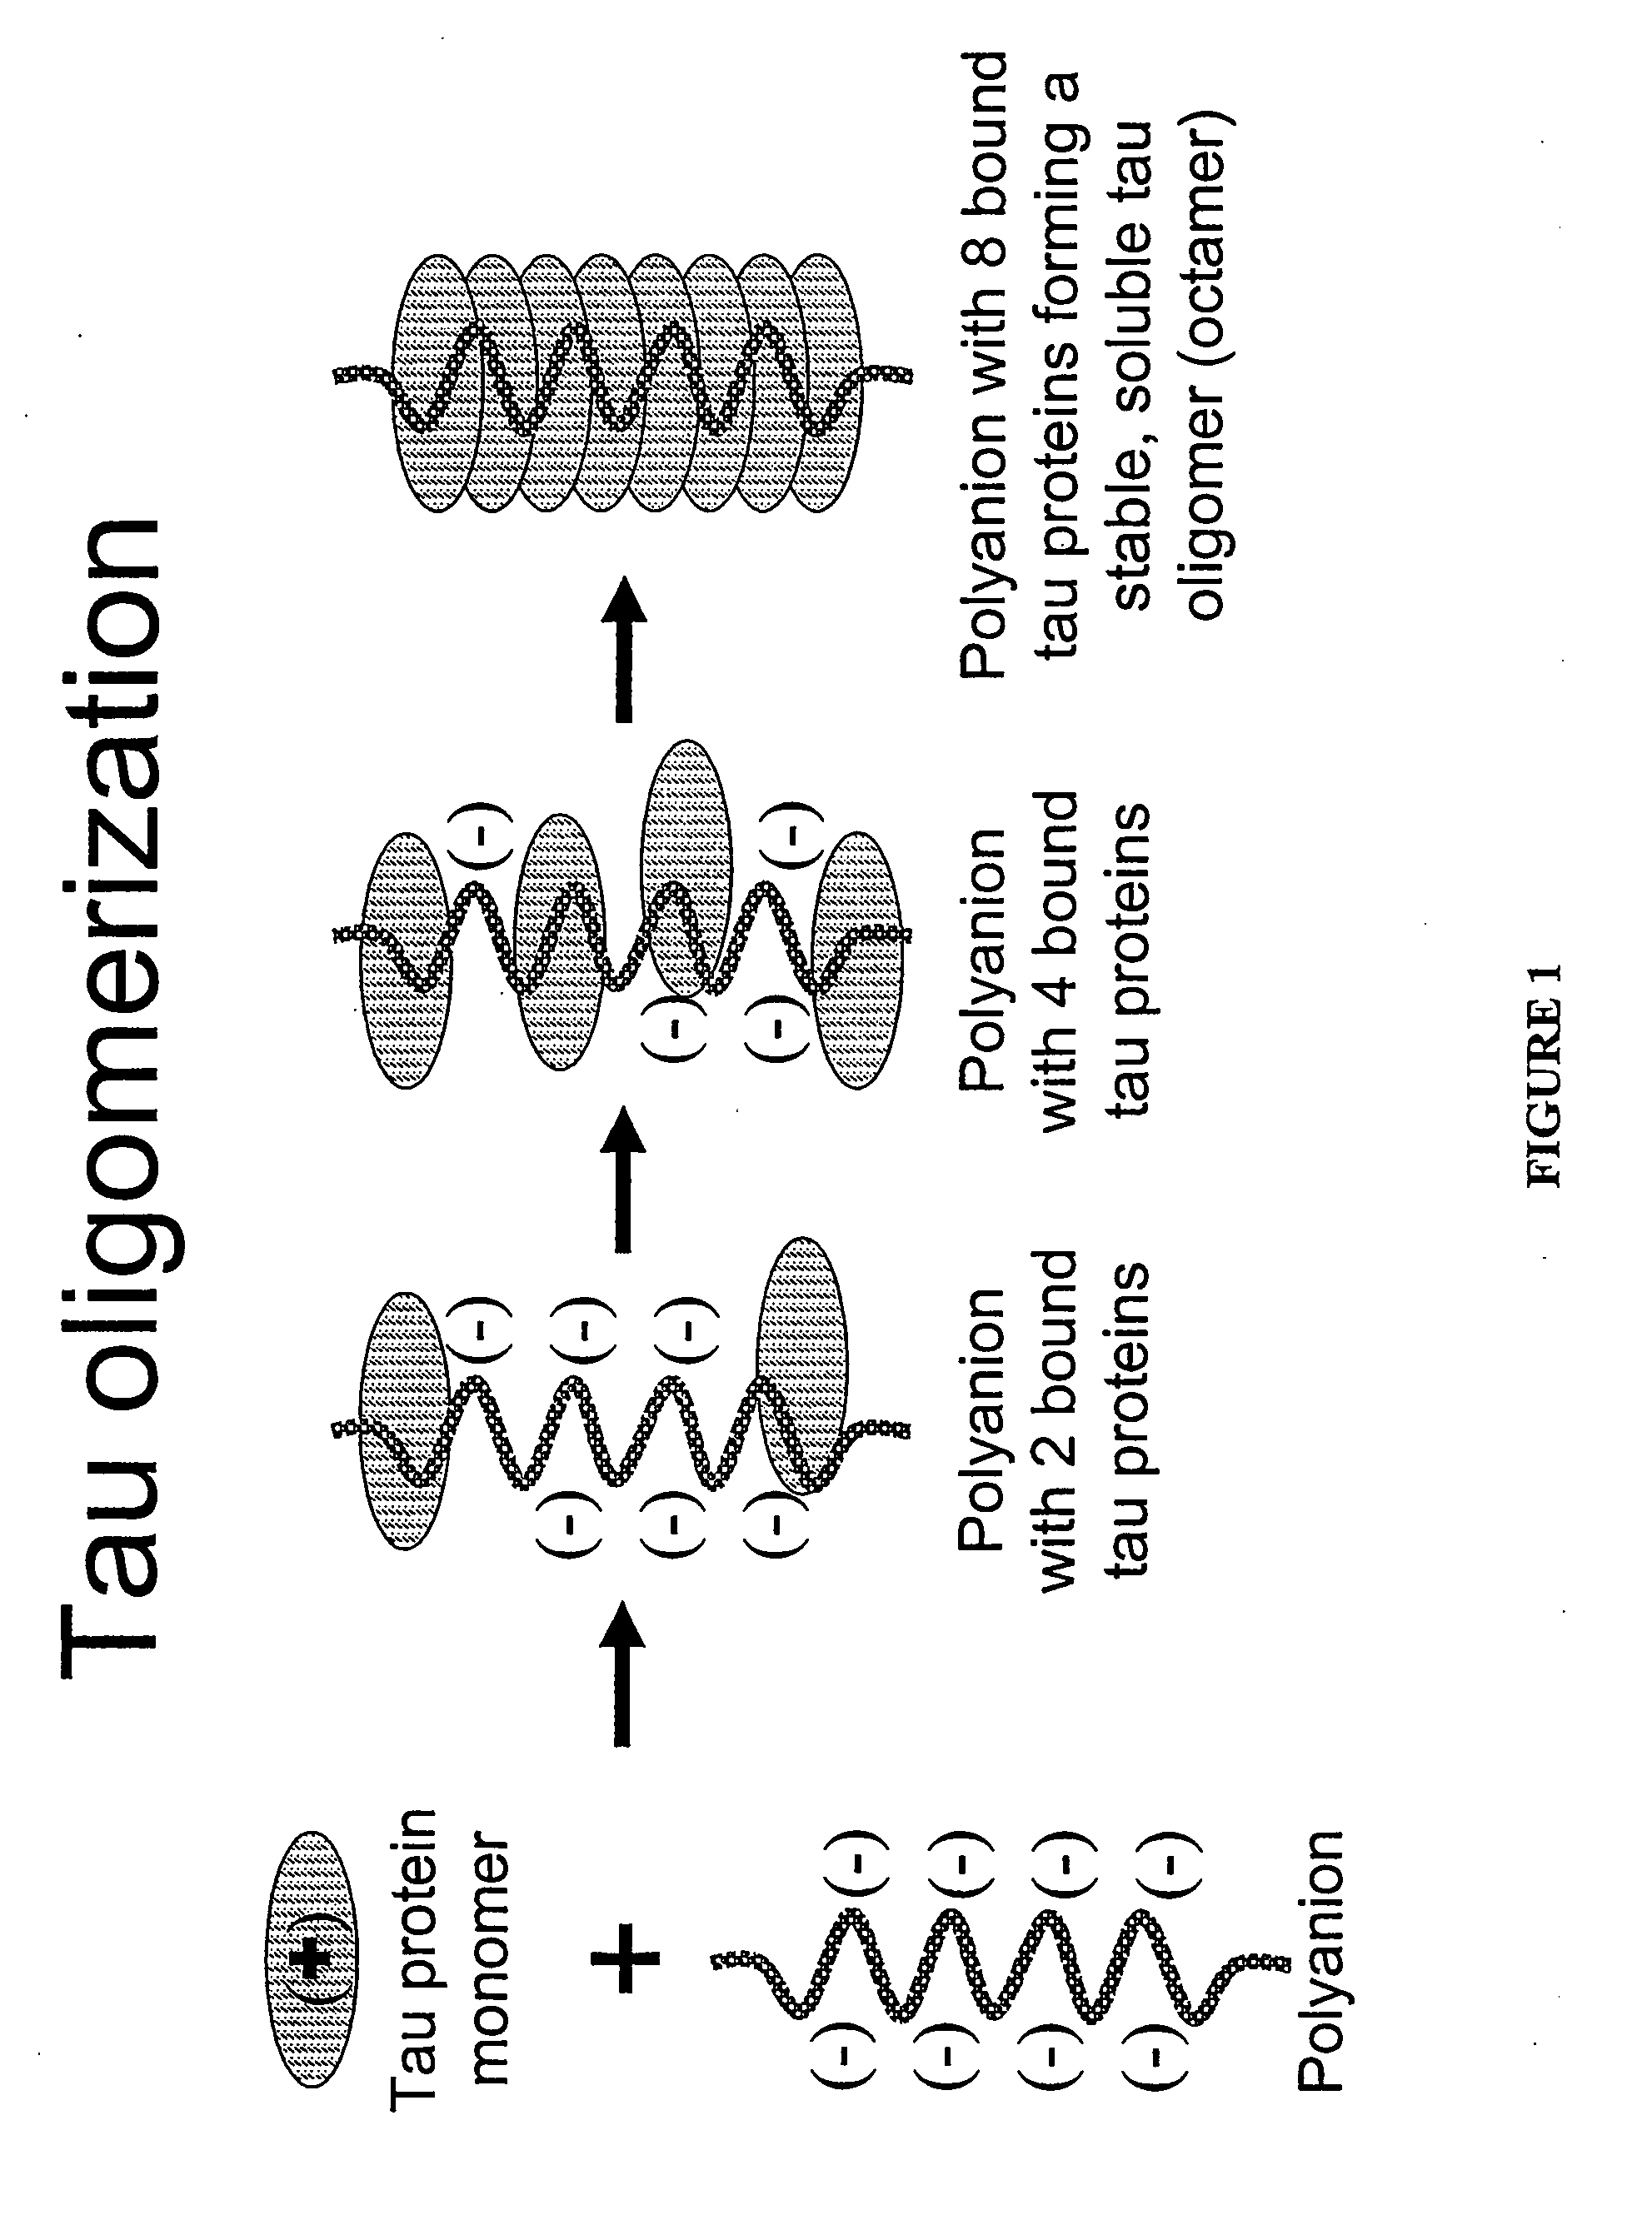 Oligomerization of amyloid proteins